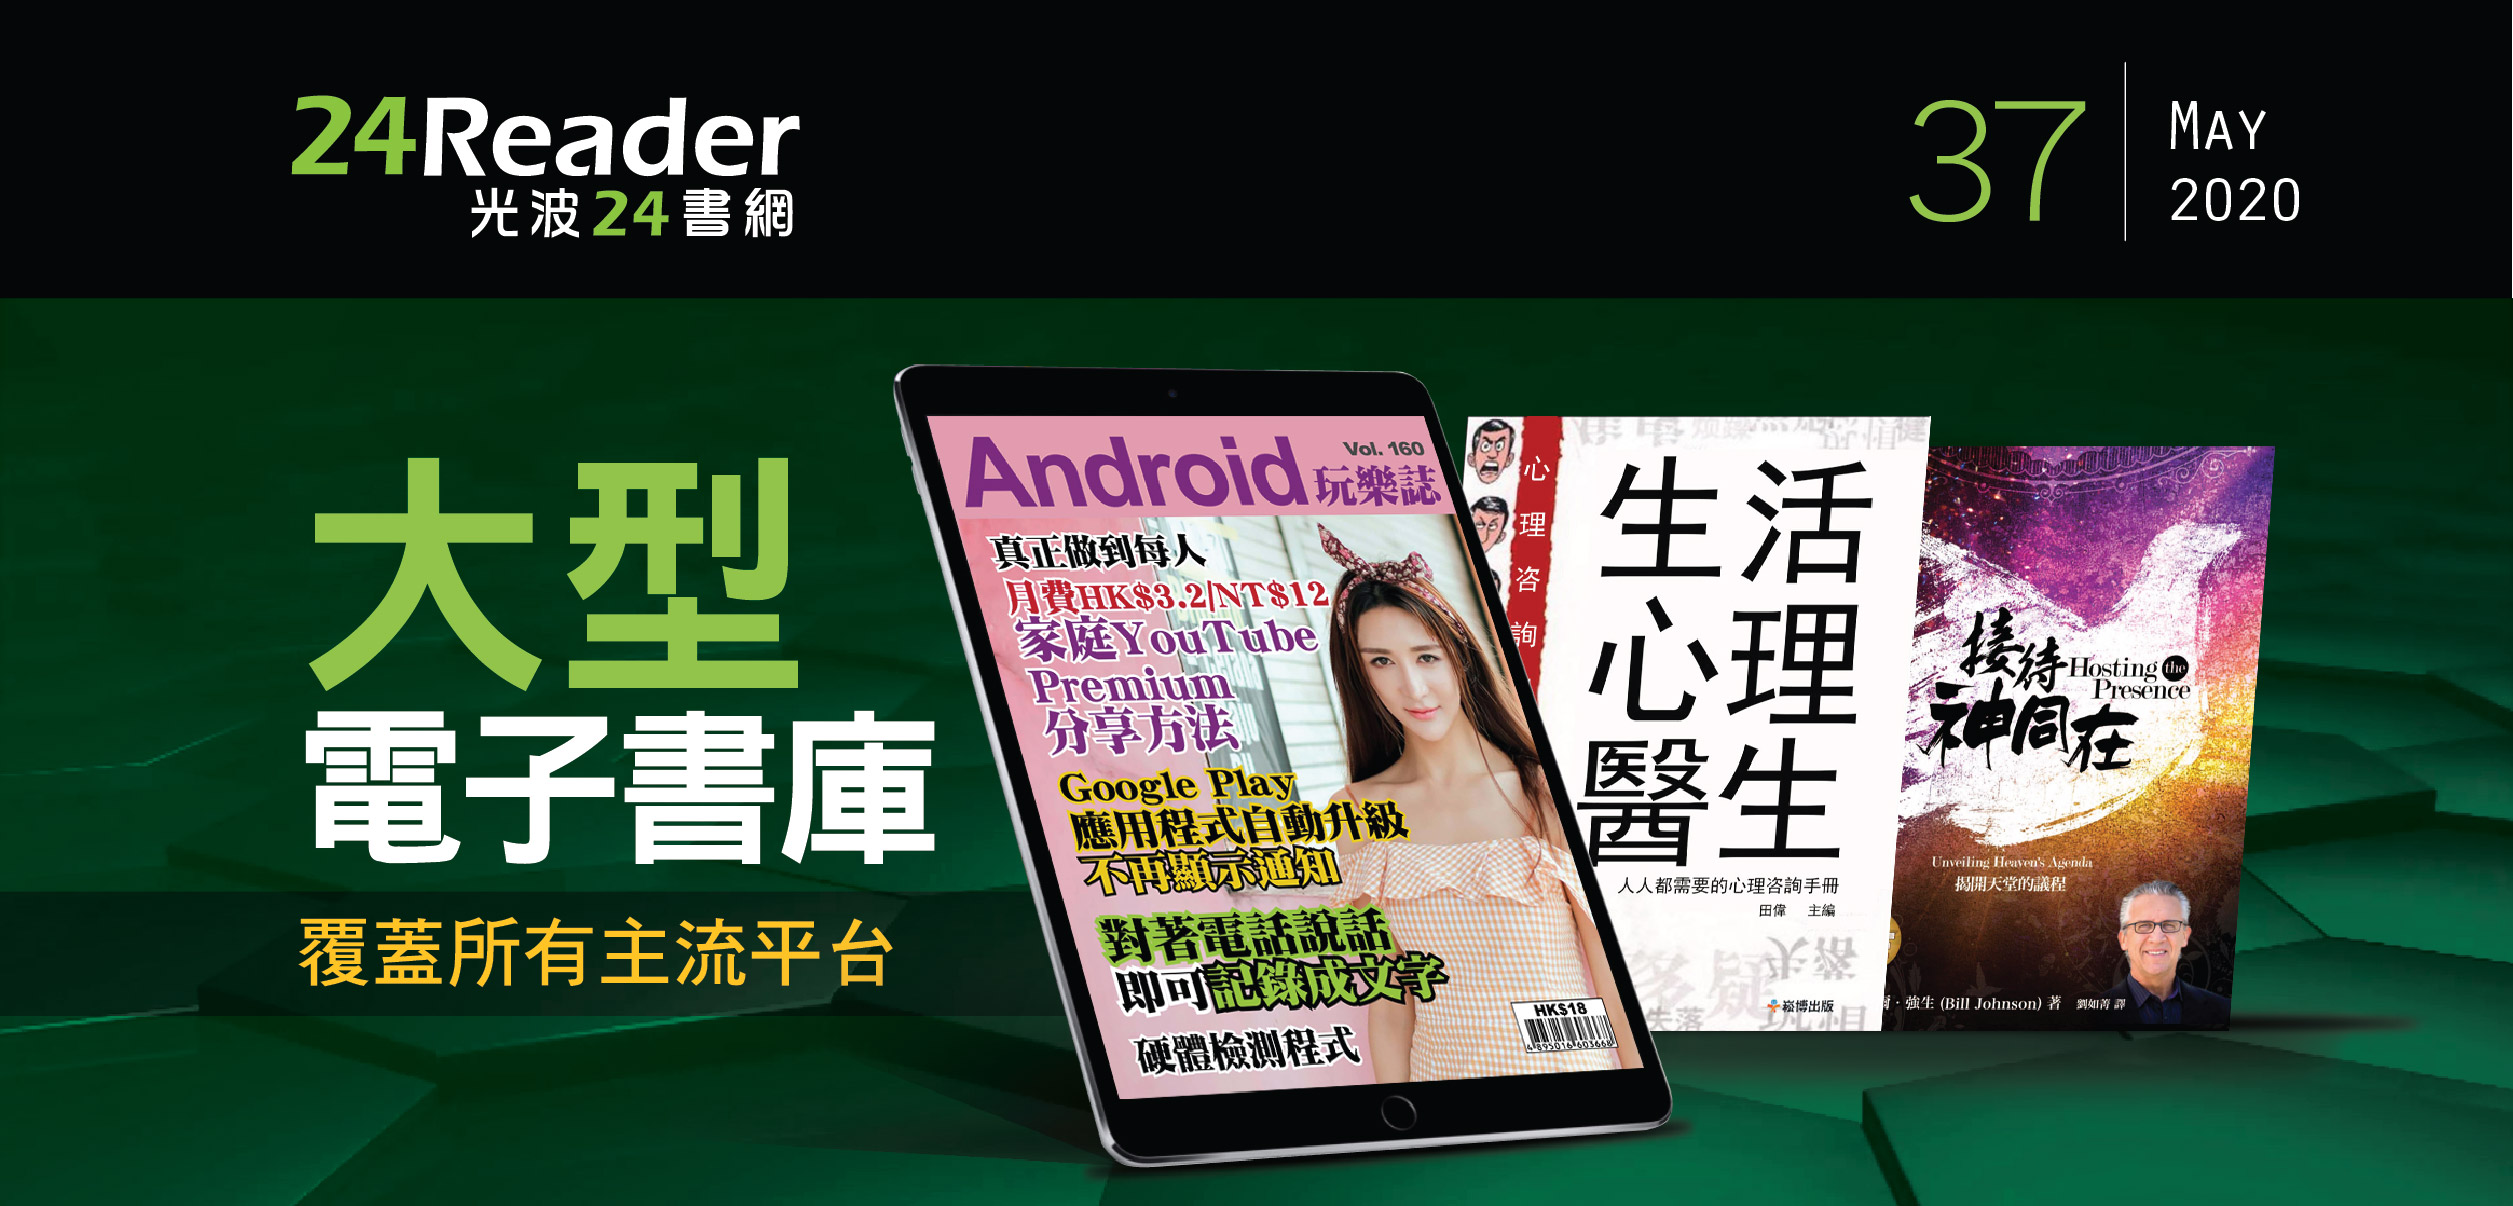 《Android 玩樂誌》每人只需要！HK$3.25家庭 YouTube Premium 分享方法